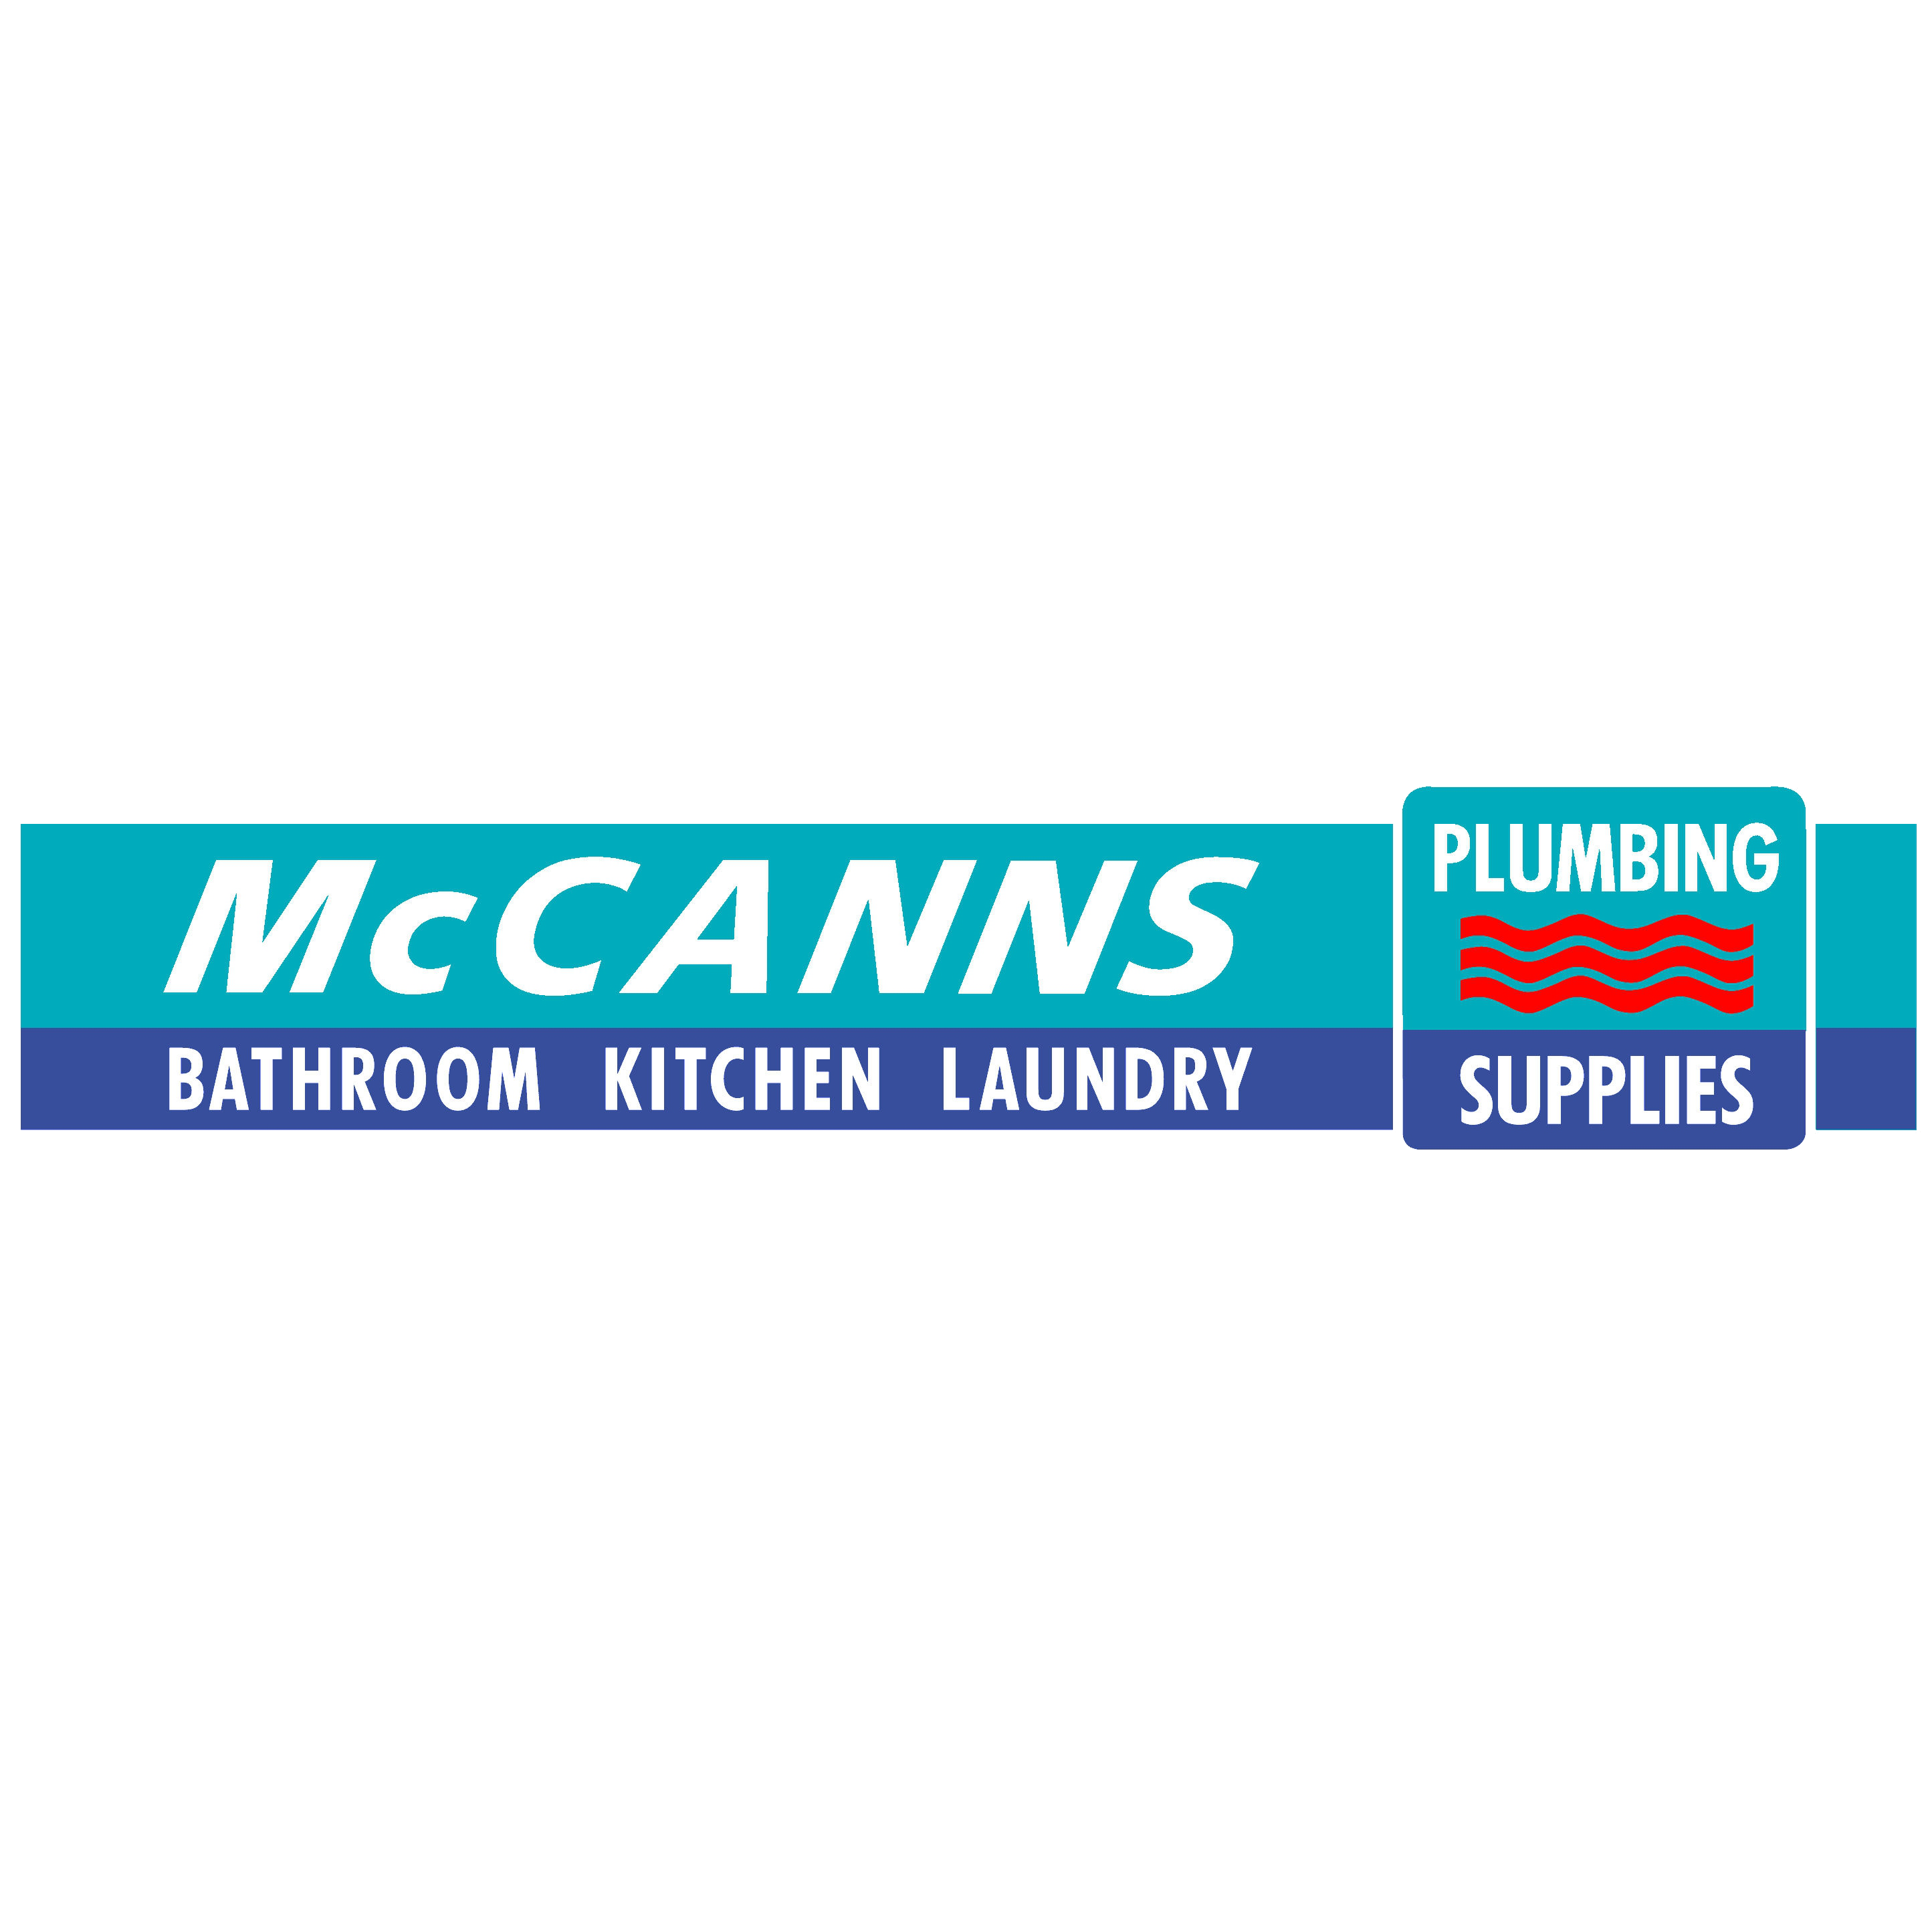 McCann's Plumbing Supplies and Sheetmetal - Newtown, VIC 3220 - (03) 5223 2233 | ShowMeLocal.com